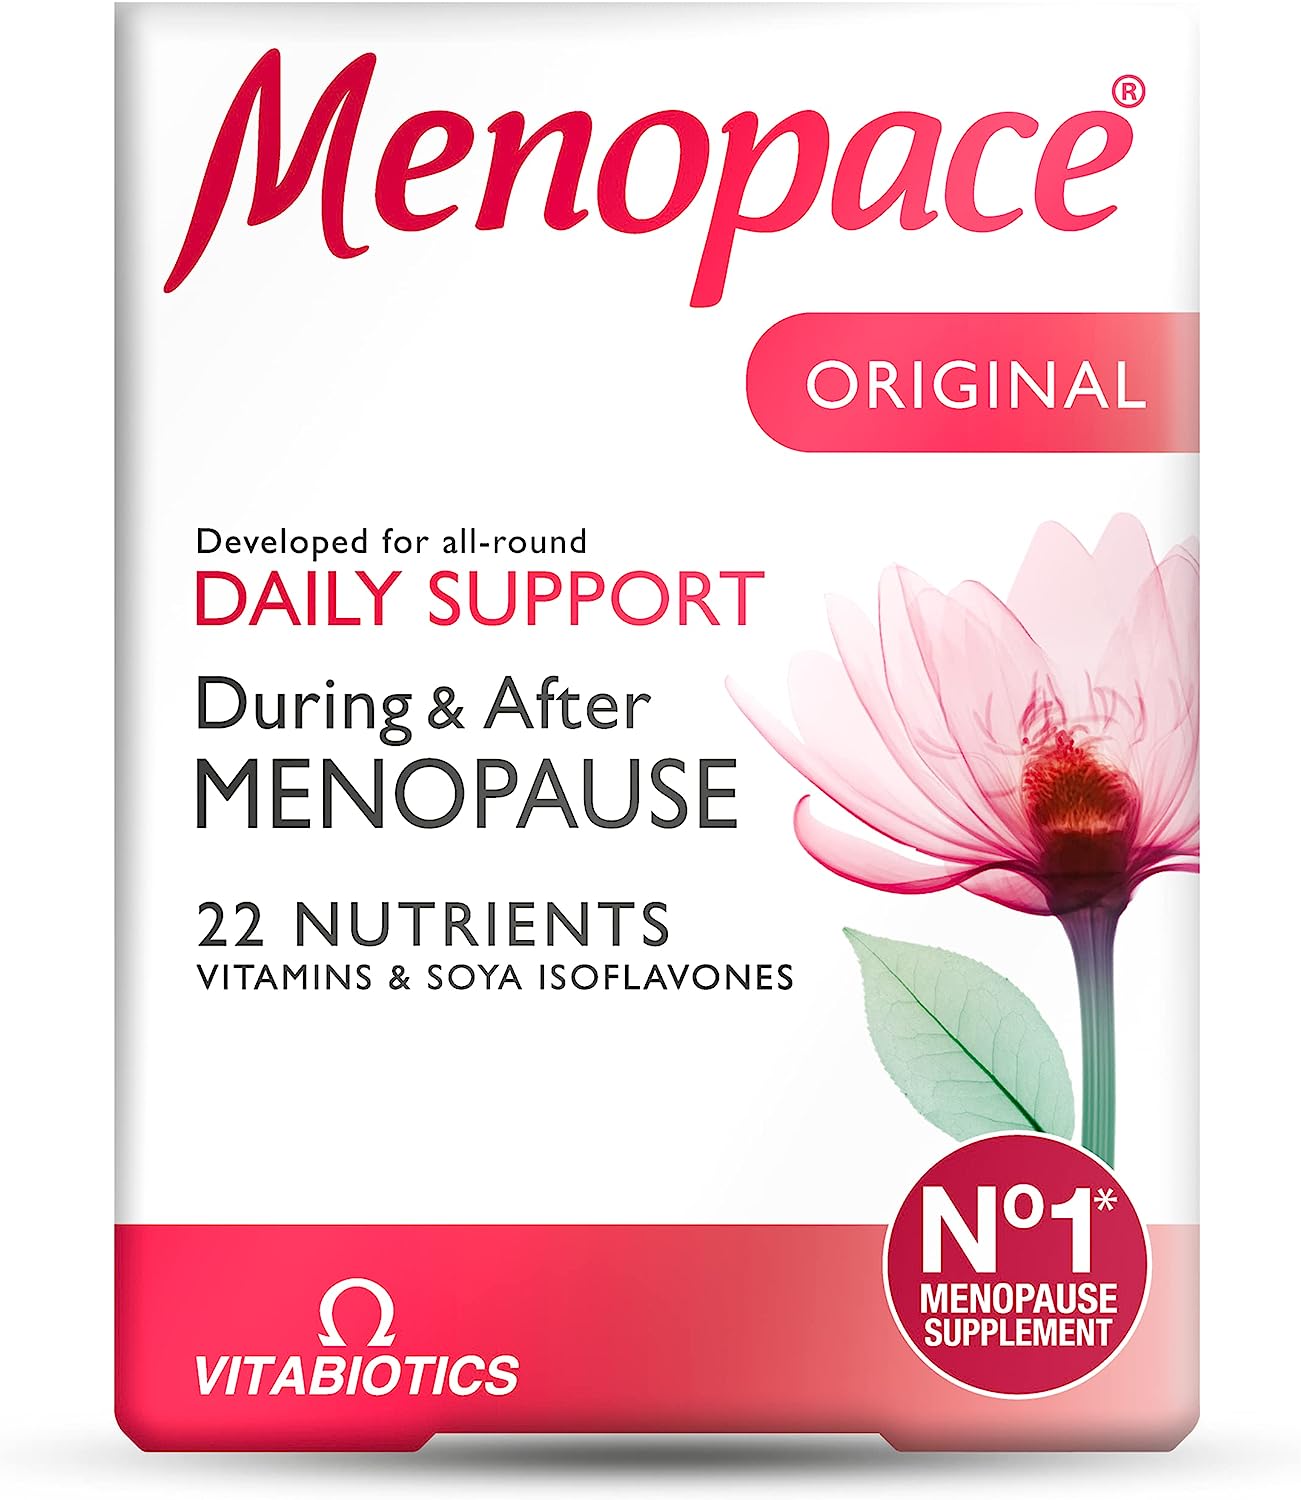 Vitabiotics Menopace Original - No. 1 Menopause Supplement for Women 30 Day RRP 4.25 CLEARANCE XL 3.99